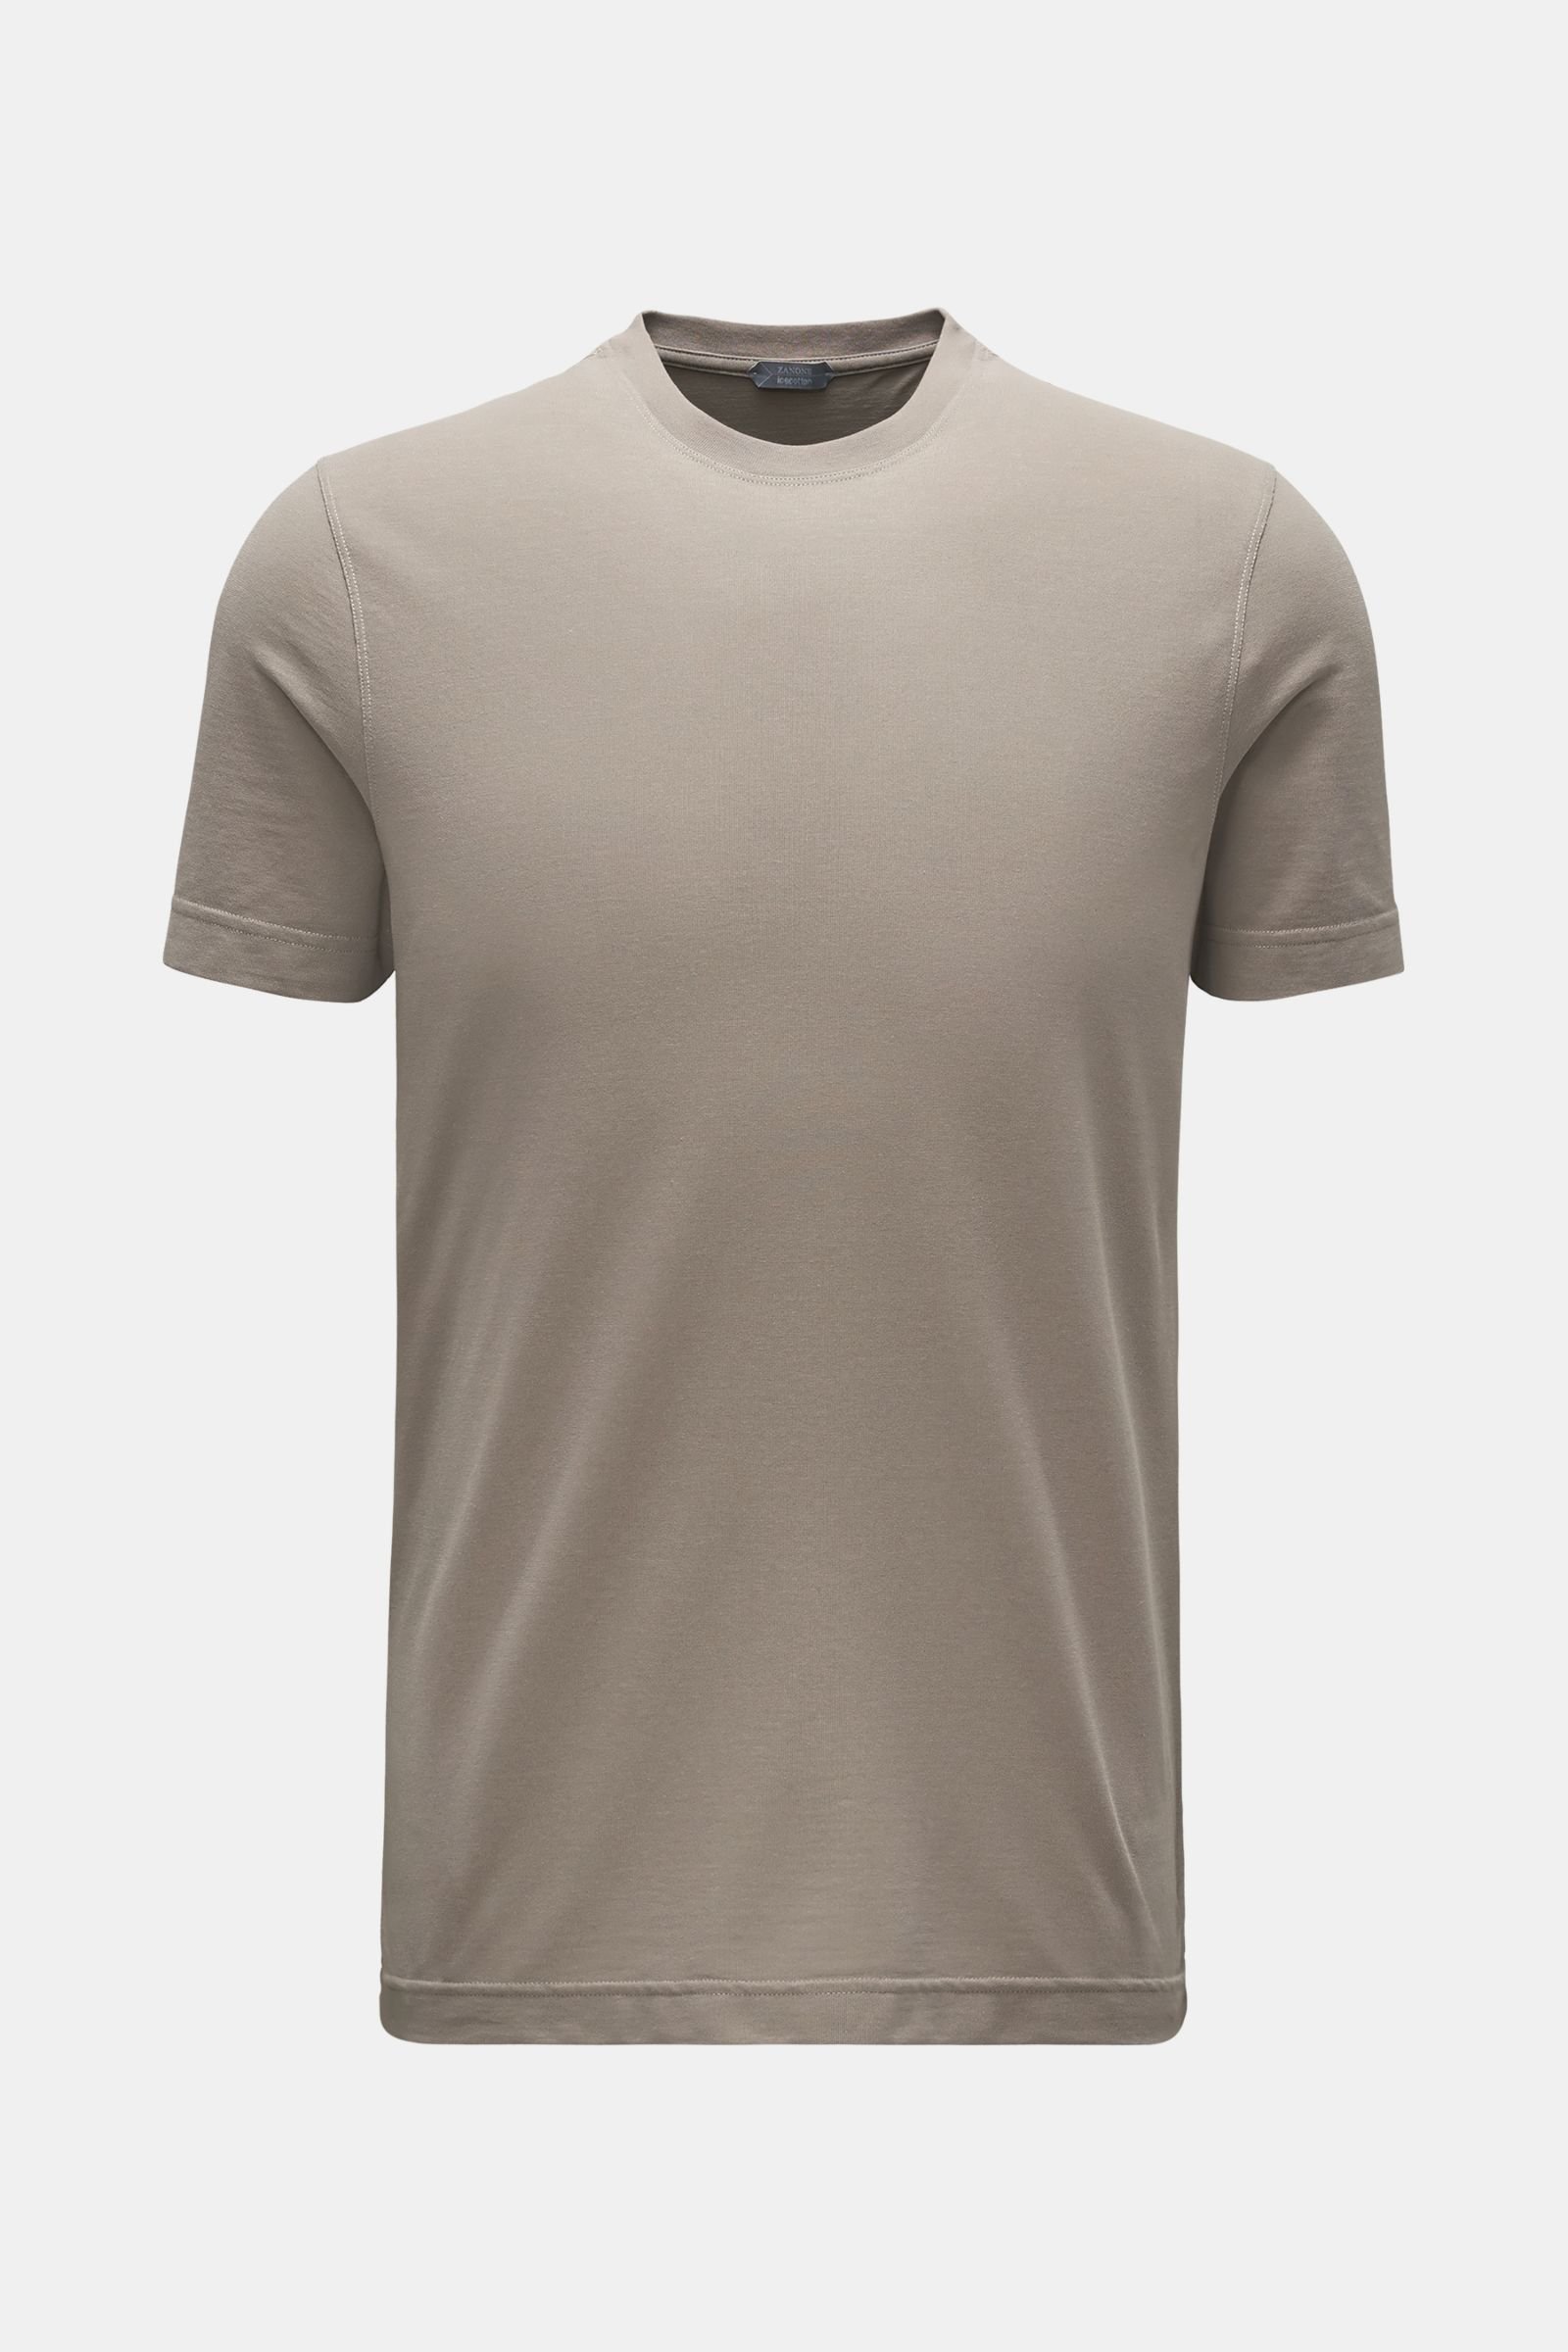 Rundhals-T-Shirt graubraun